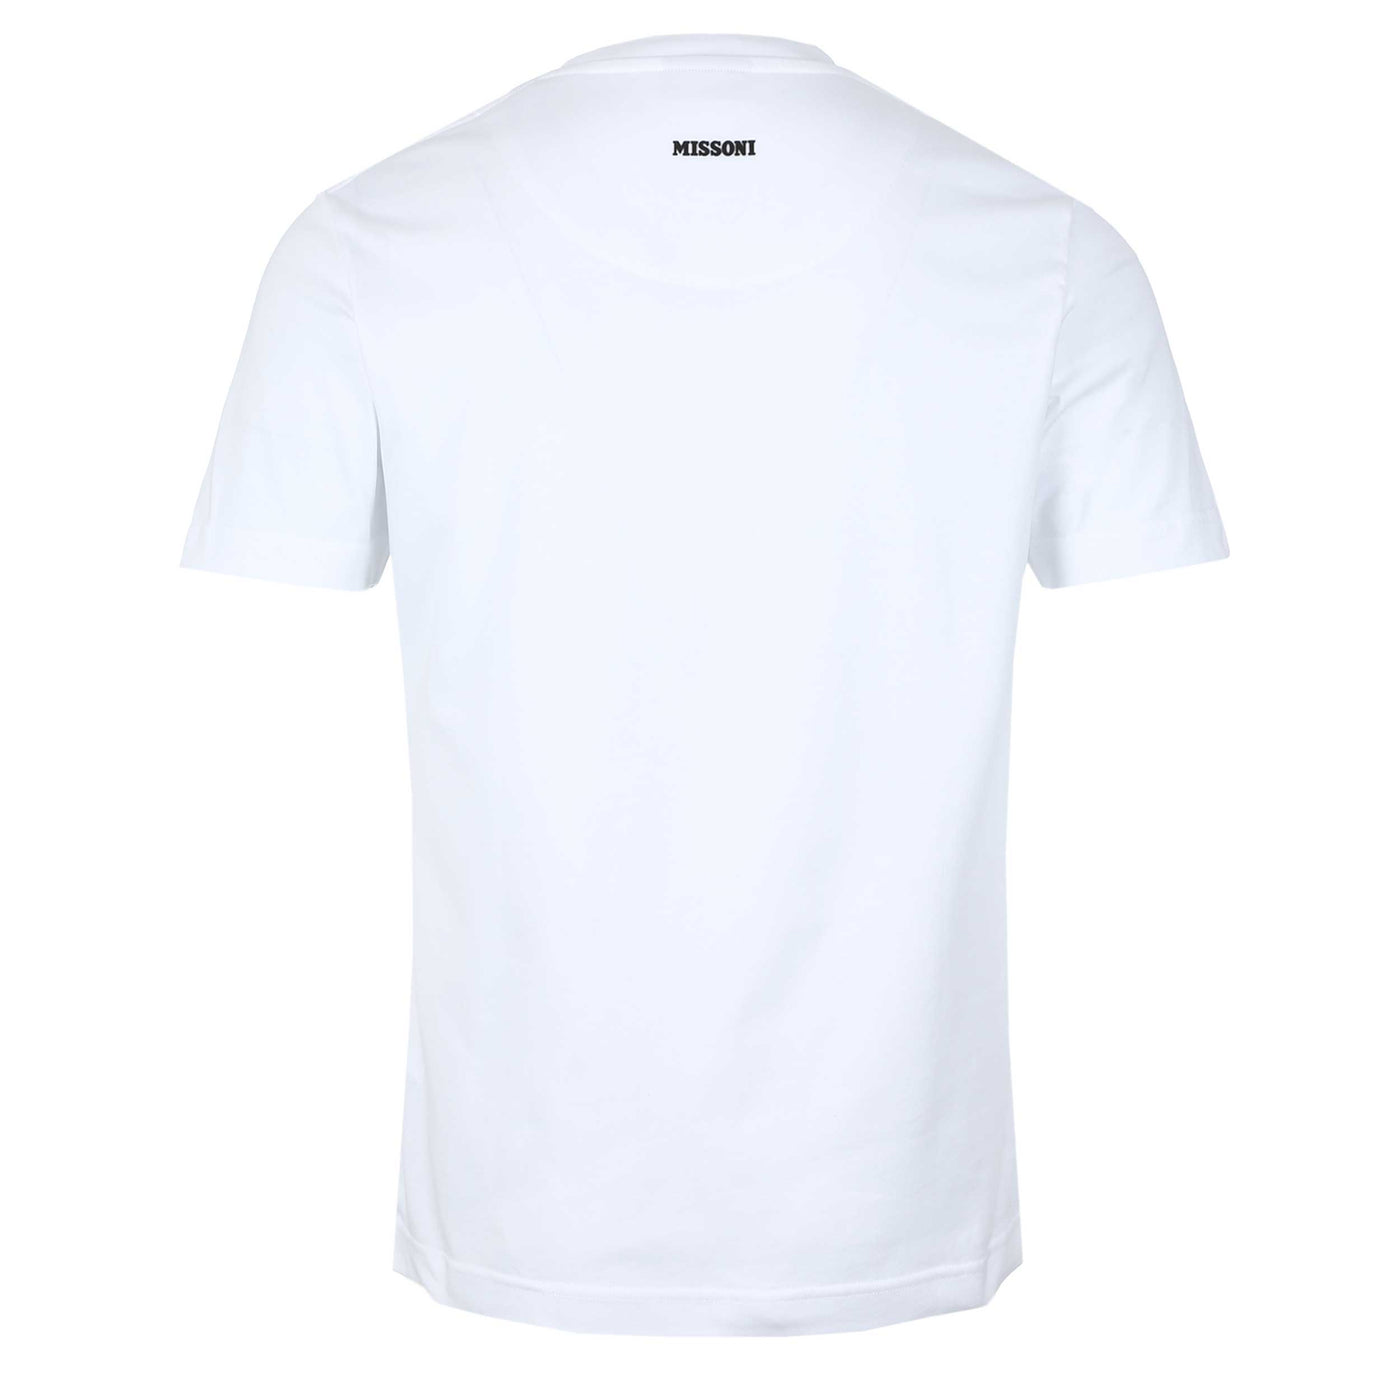 Missoni Pixel Print T-Shirt in White Back